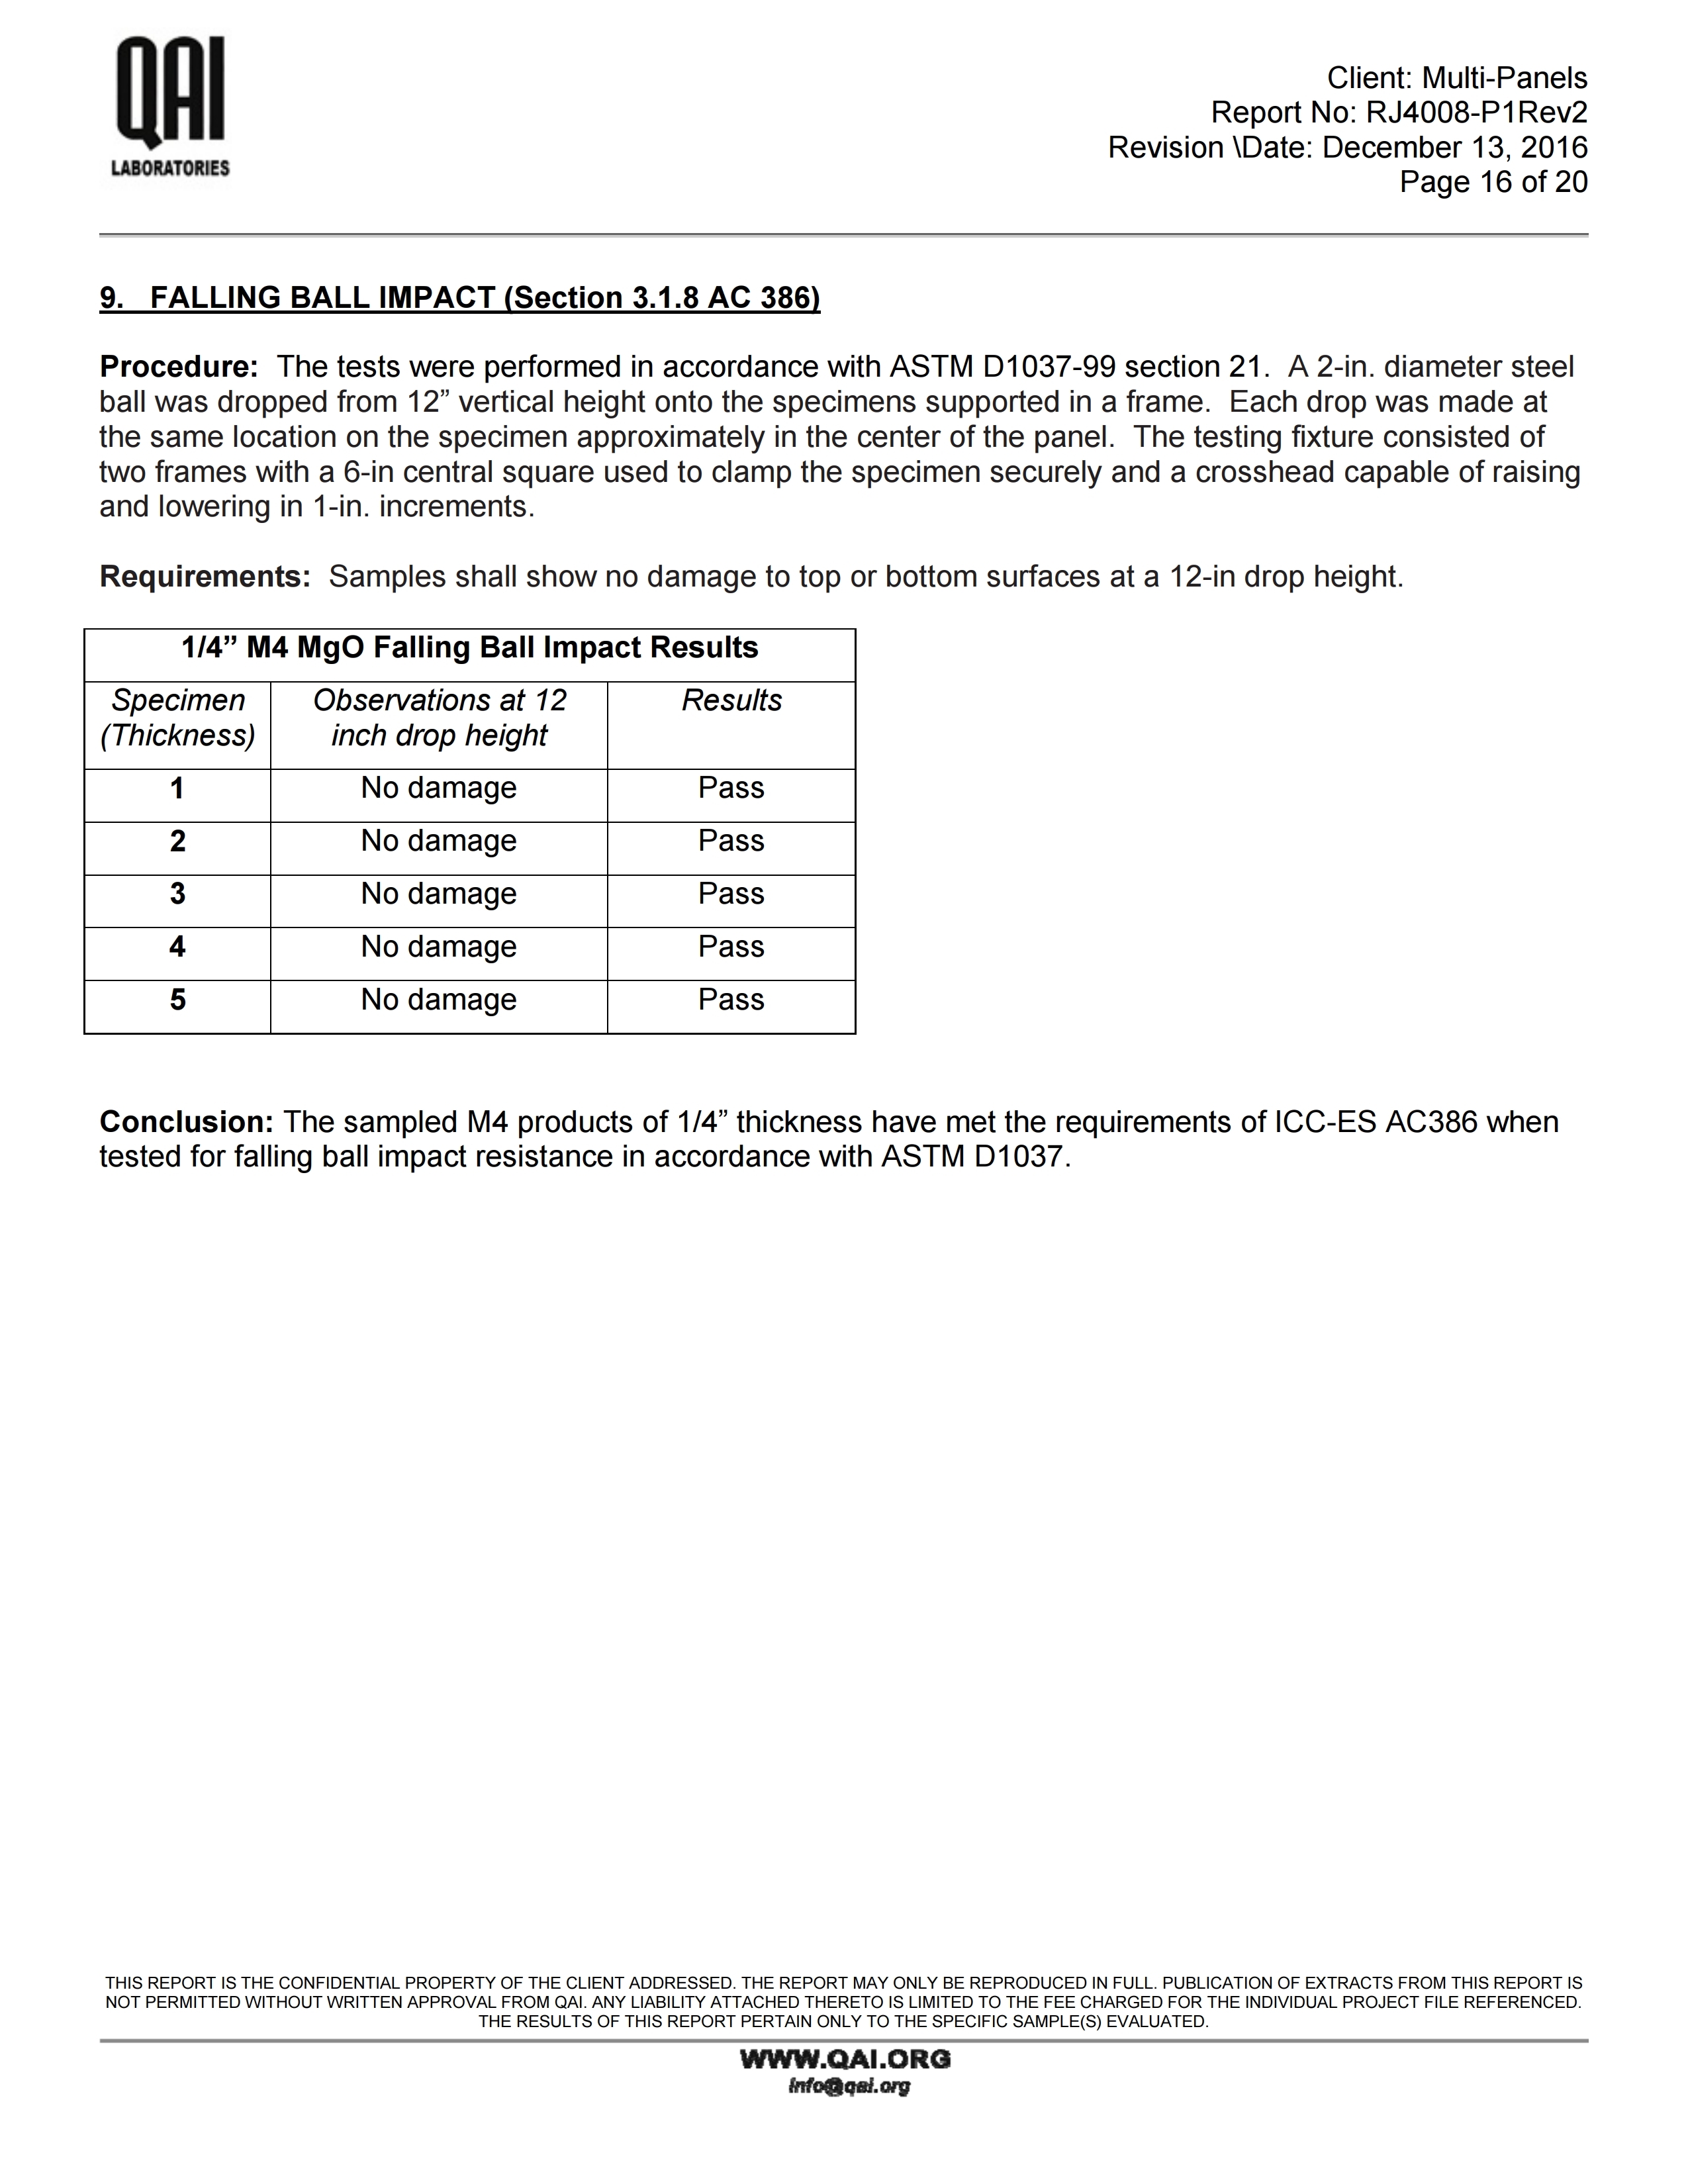 RJ4008-P1REV2-Multi-Panels-M4-AC386 Report-13122016 (2).pdf_page_16.jpg